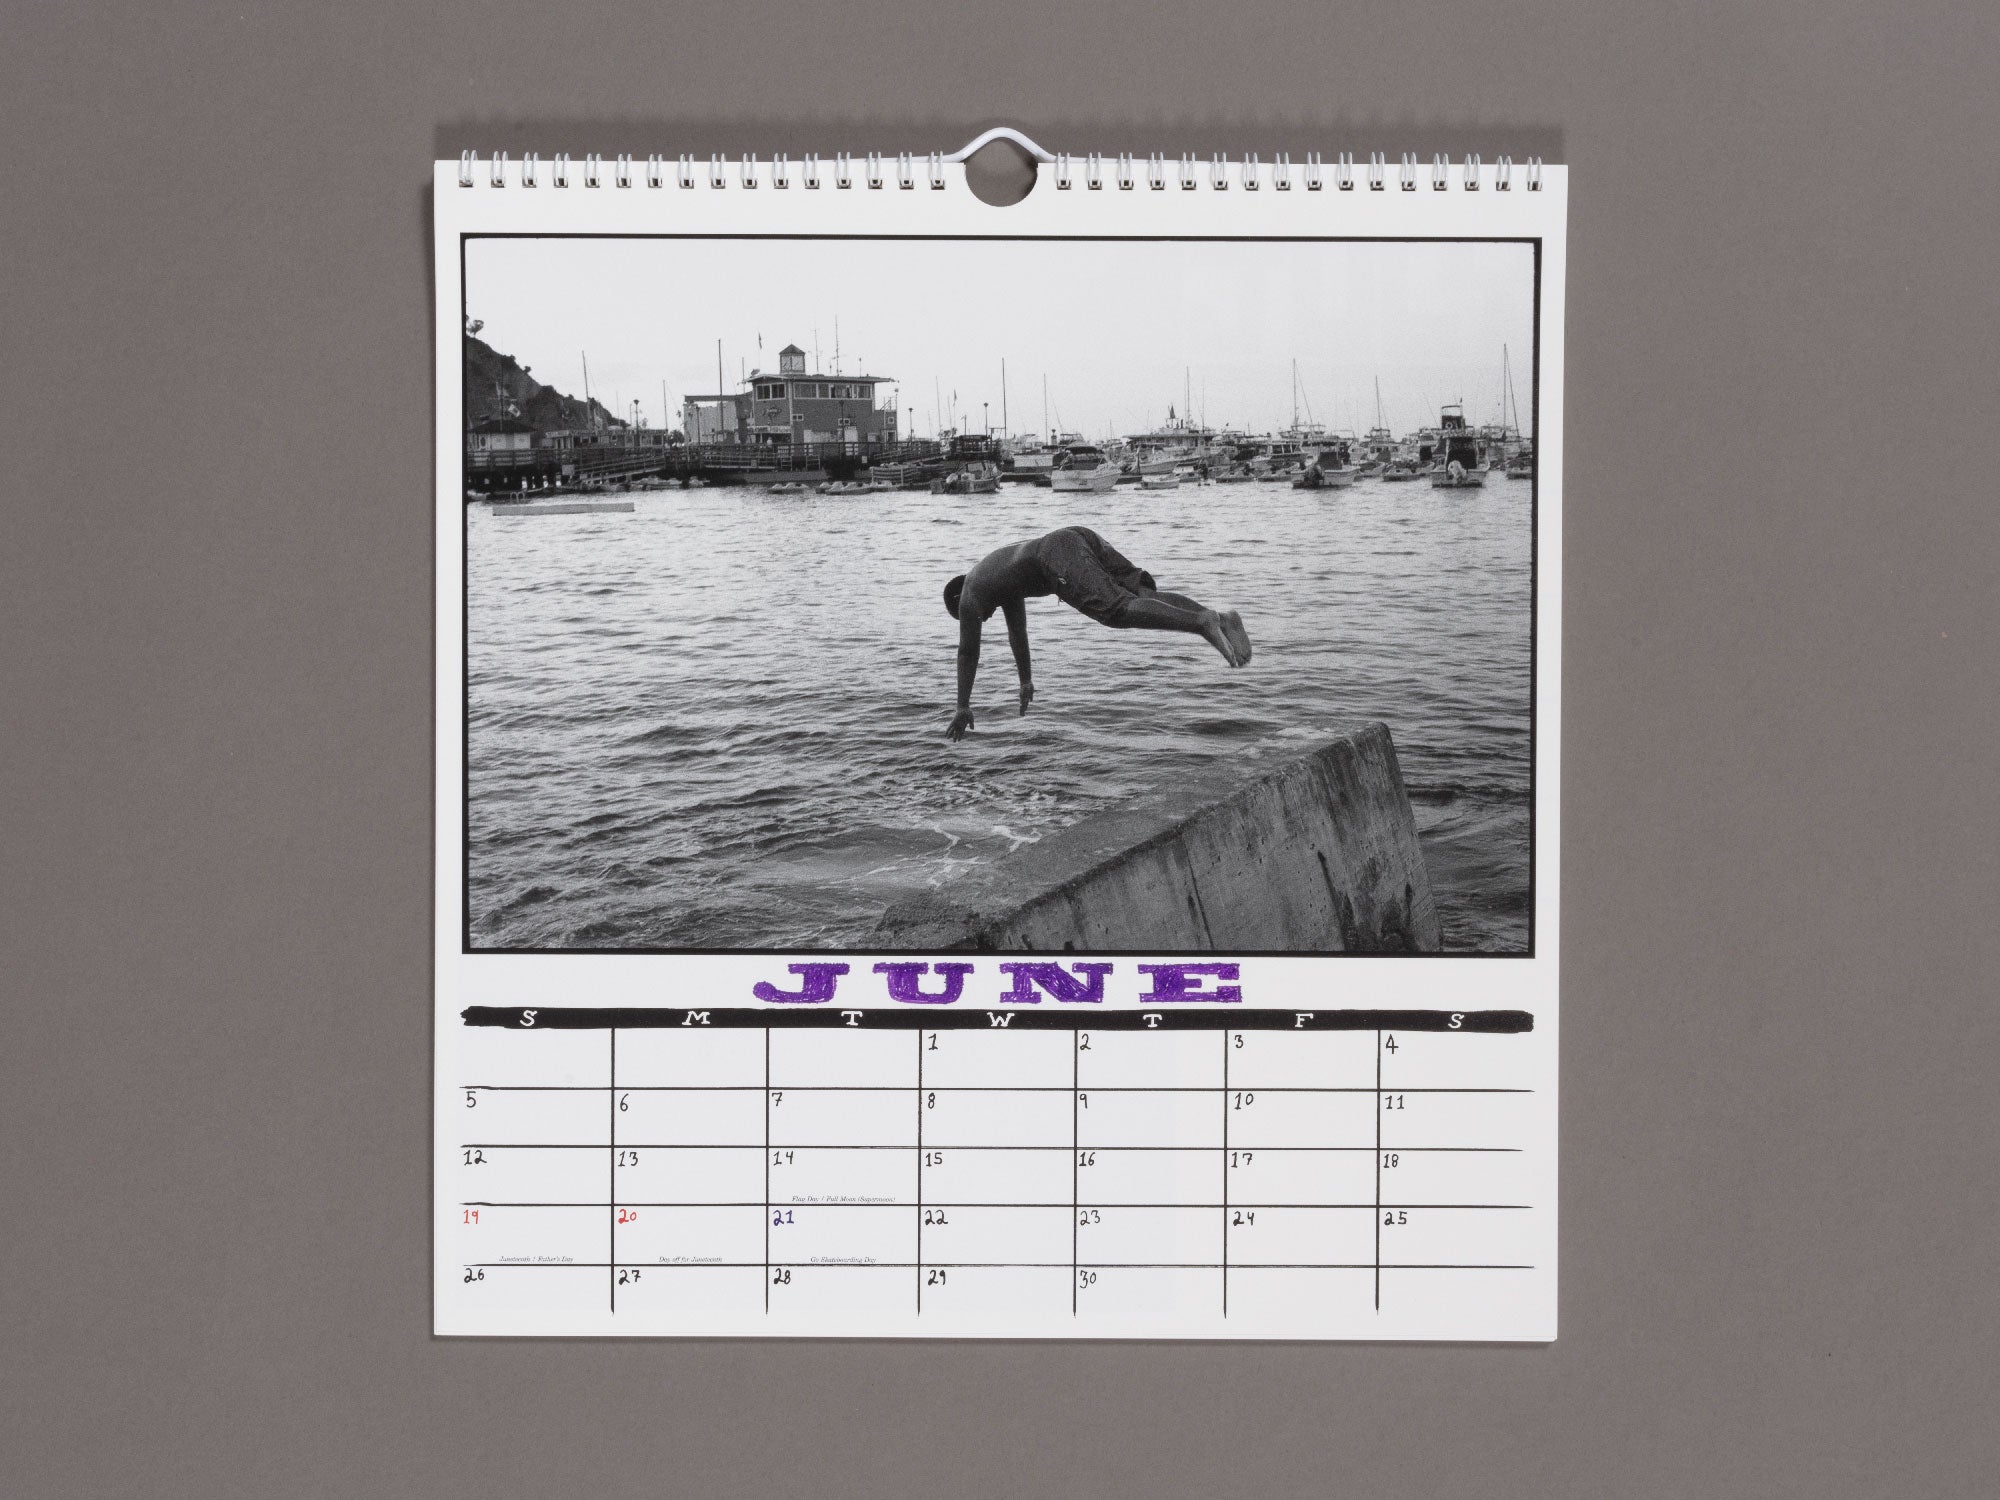 2022 Calendar - Ed Templeton